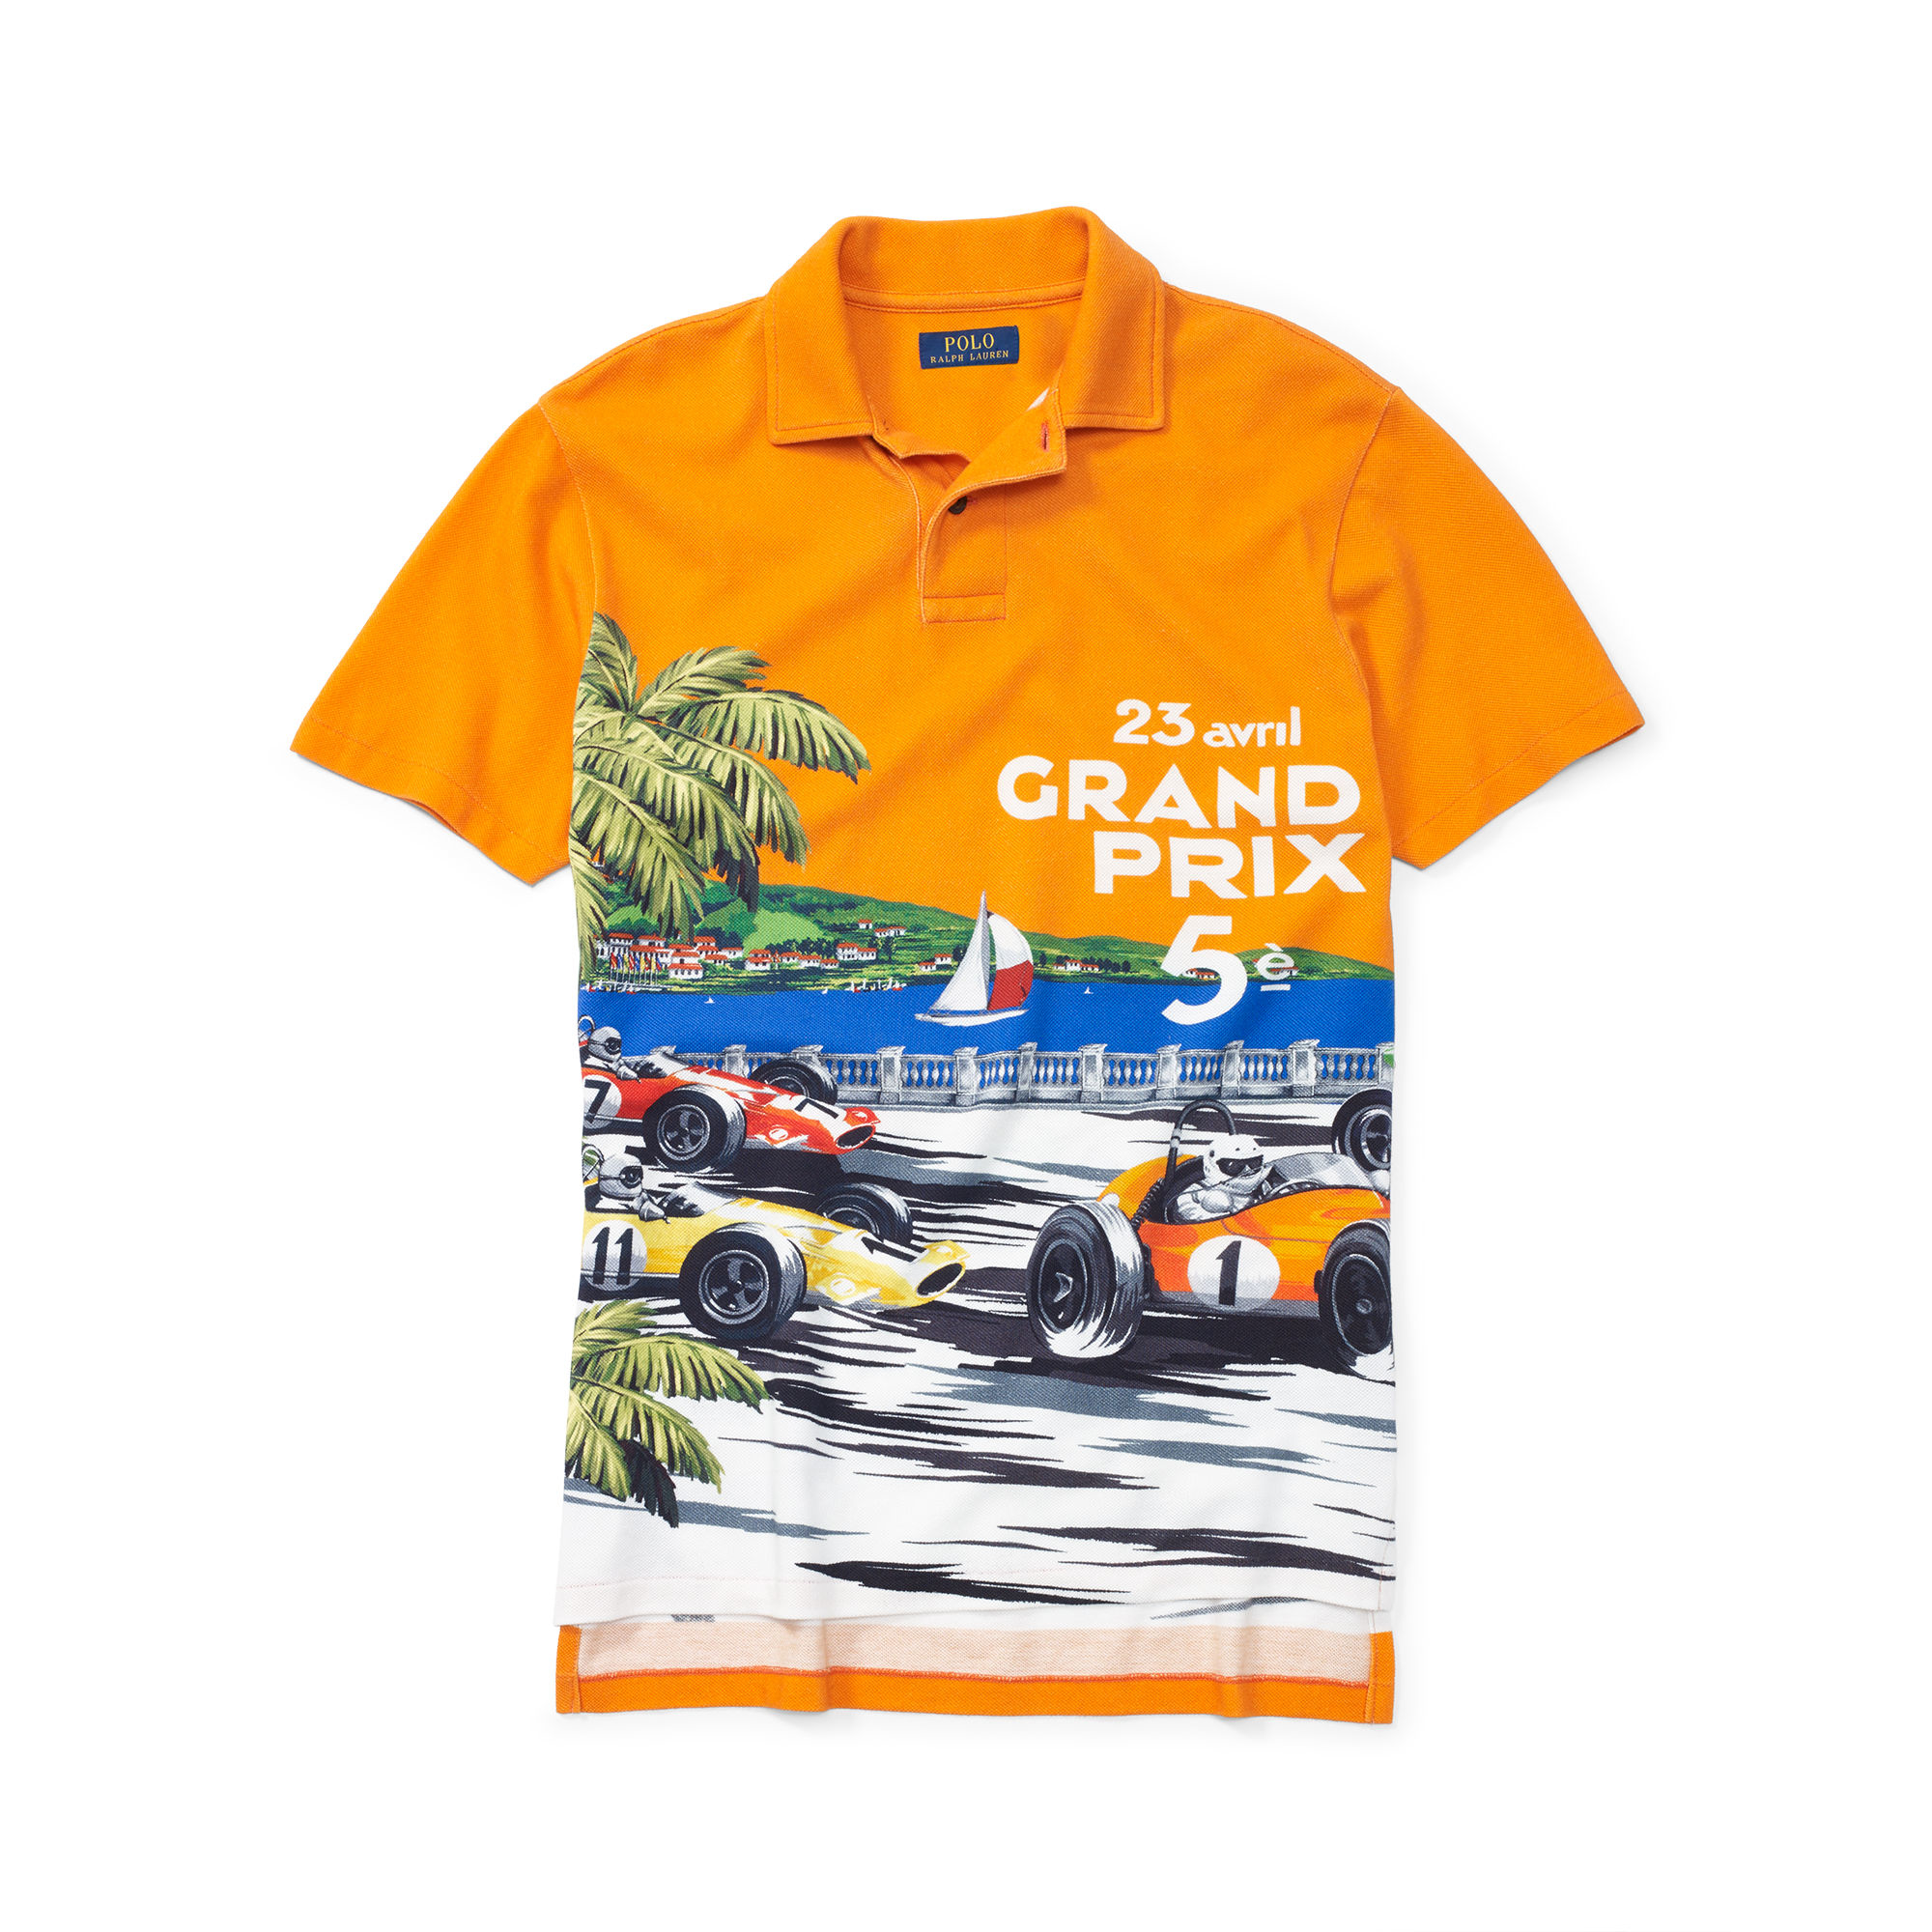 Polo Ralph Lauren Cotton Featherweight Mesh Polo Shirt in Orange Print  (Orange) for Men - Lyst